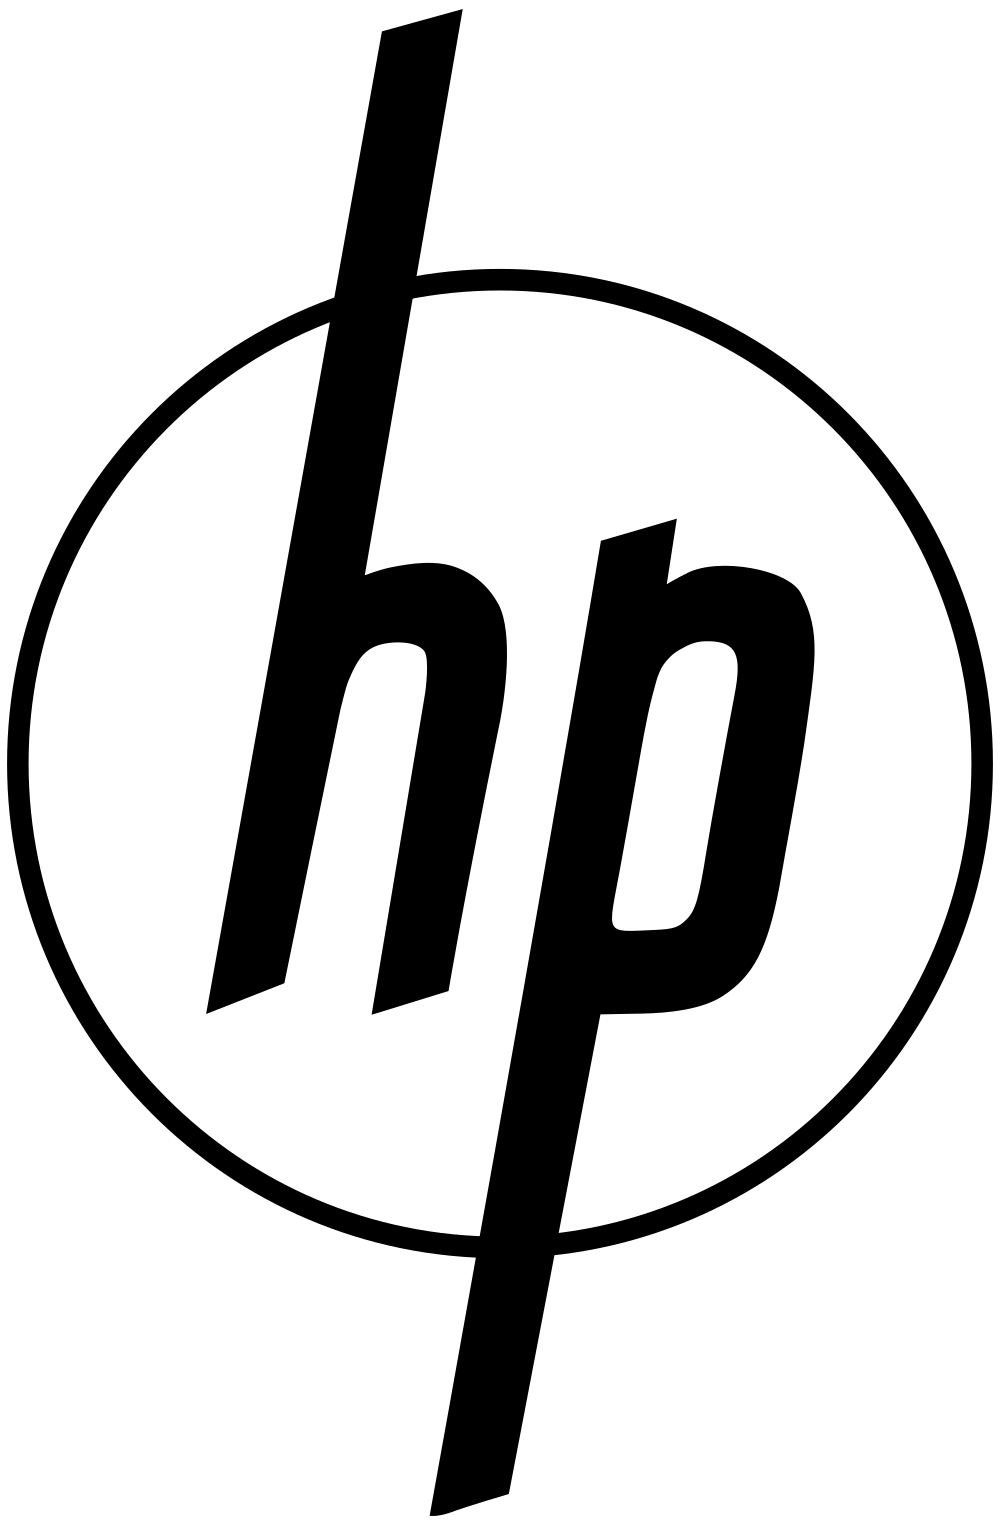 Old HP Logo - File:HP-original-logo-1954-trademark.svg - Wikimedia Commons